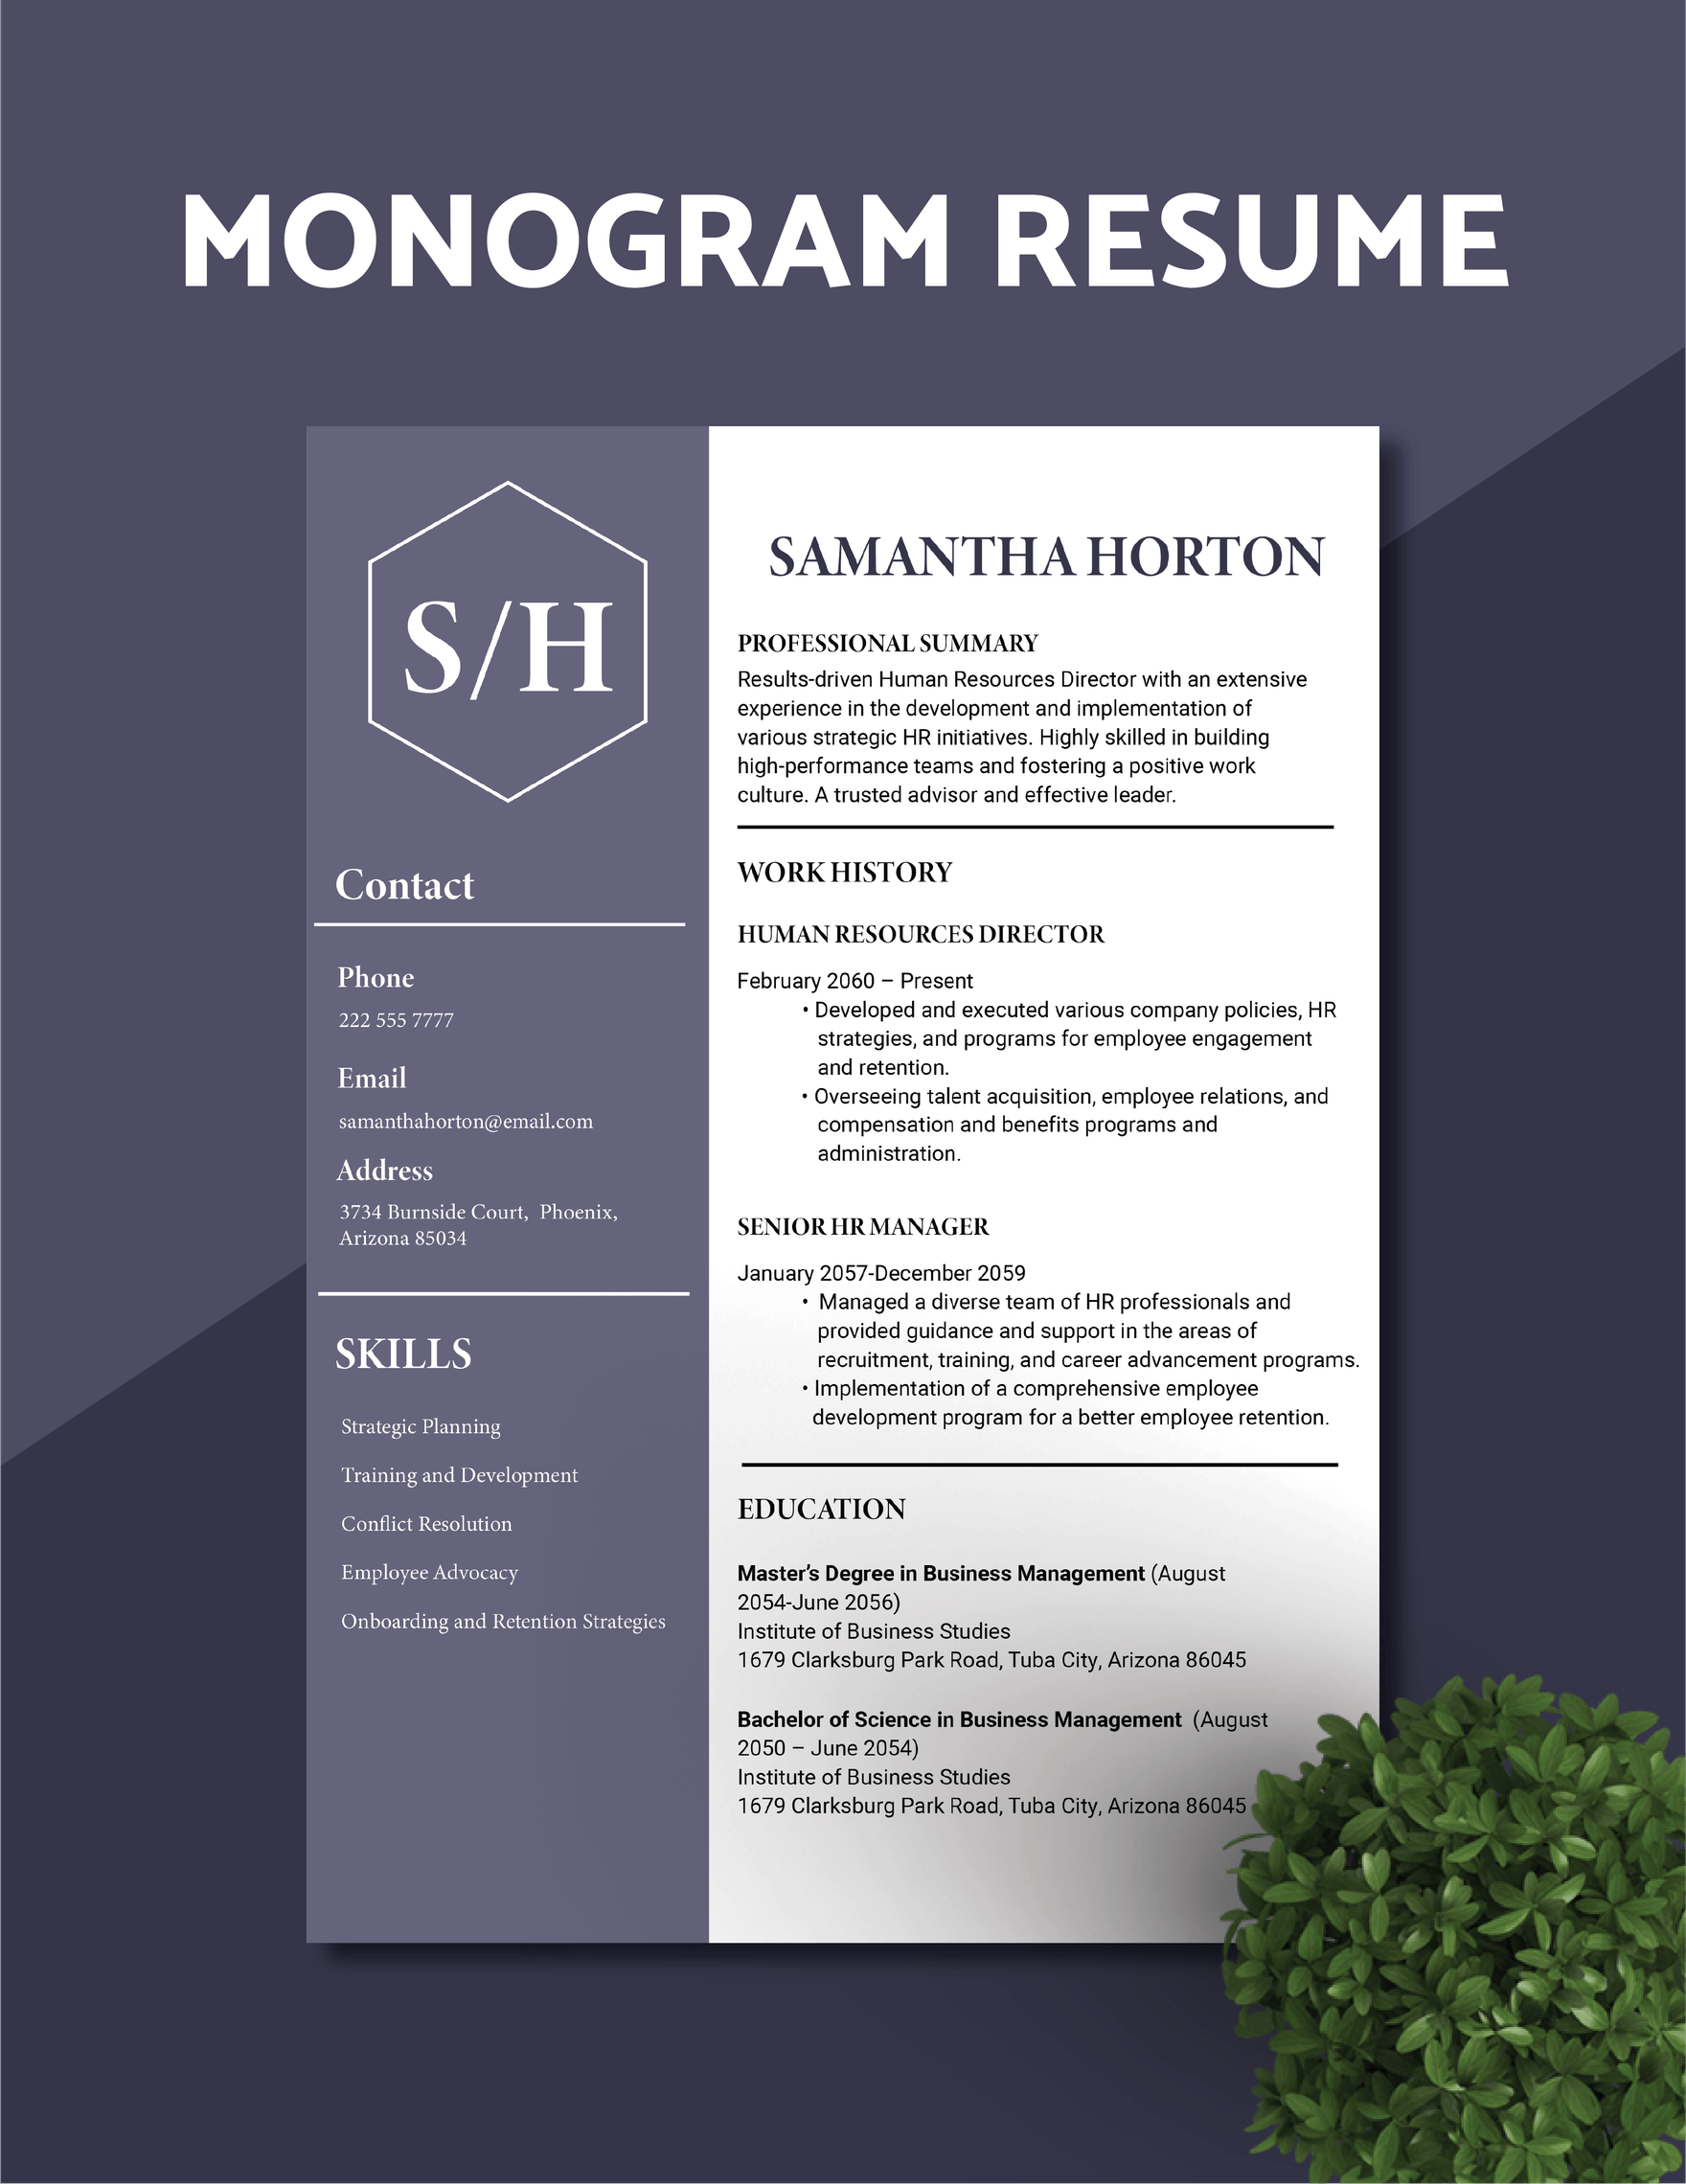 monogram-resume-template